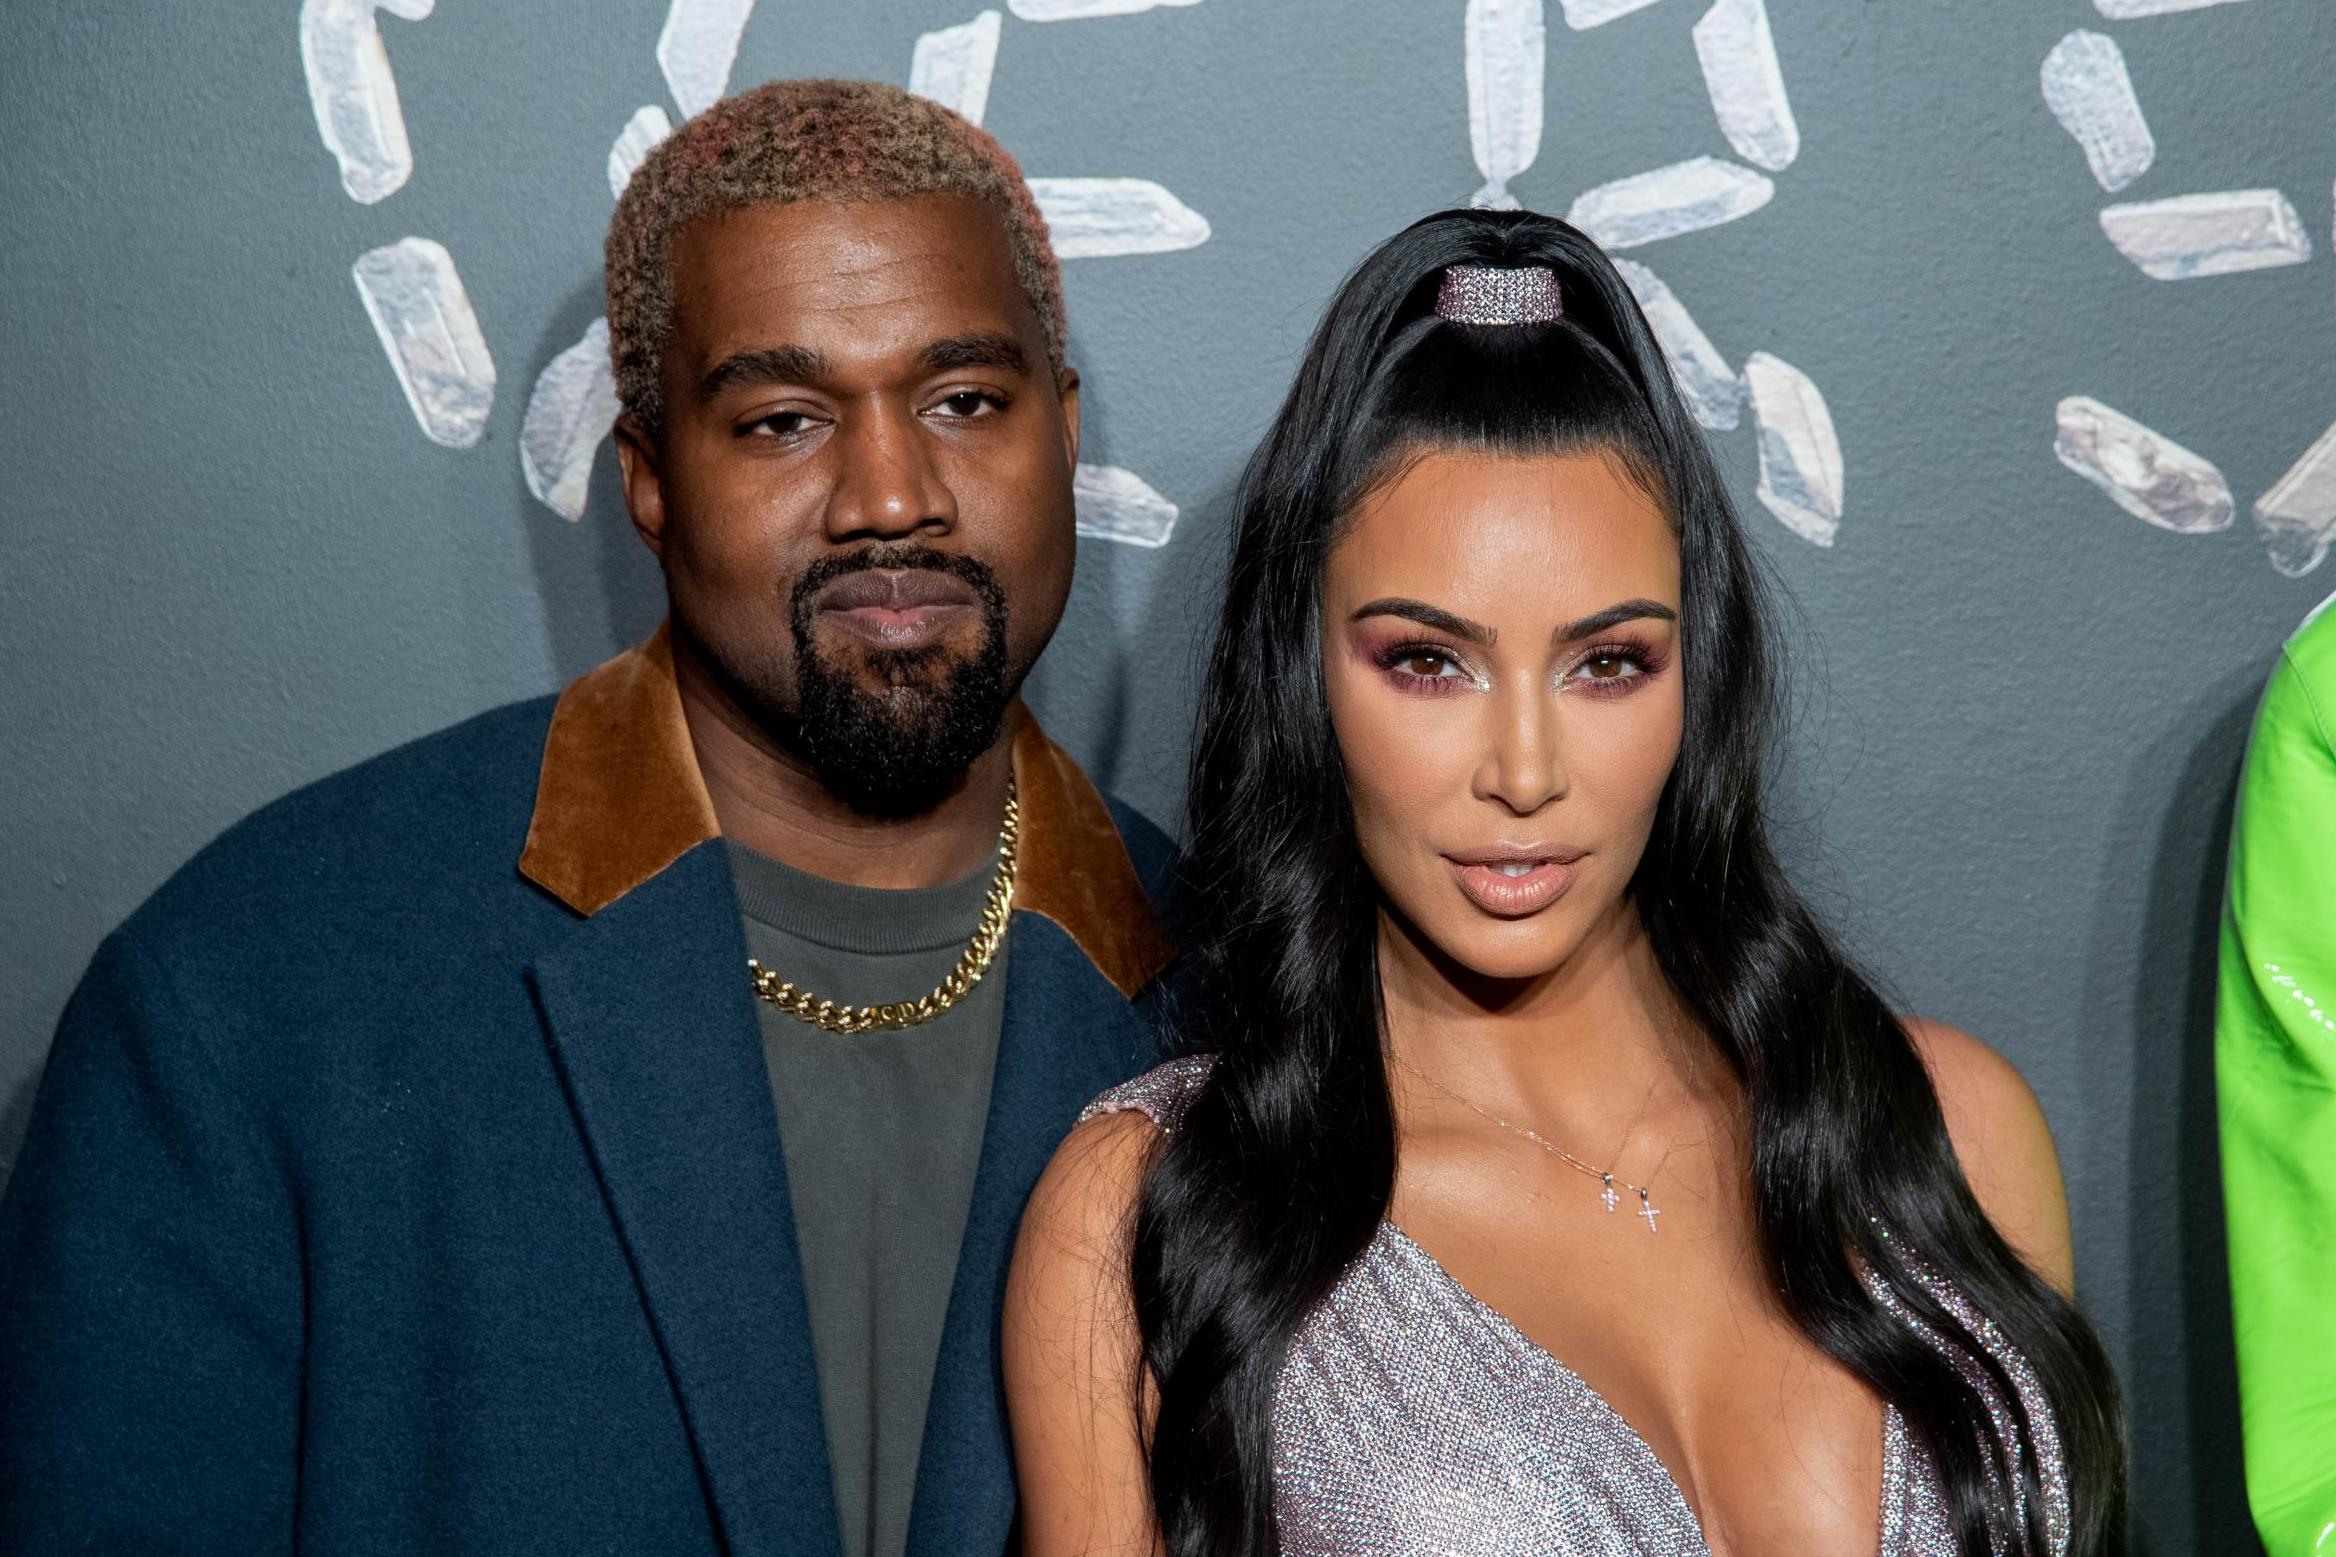 Kardashian addresses Kanye's bipolar disorder and asks for understanding